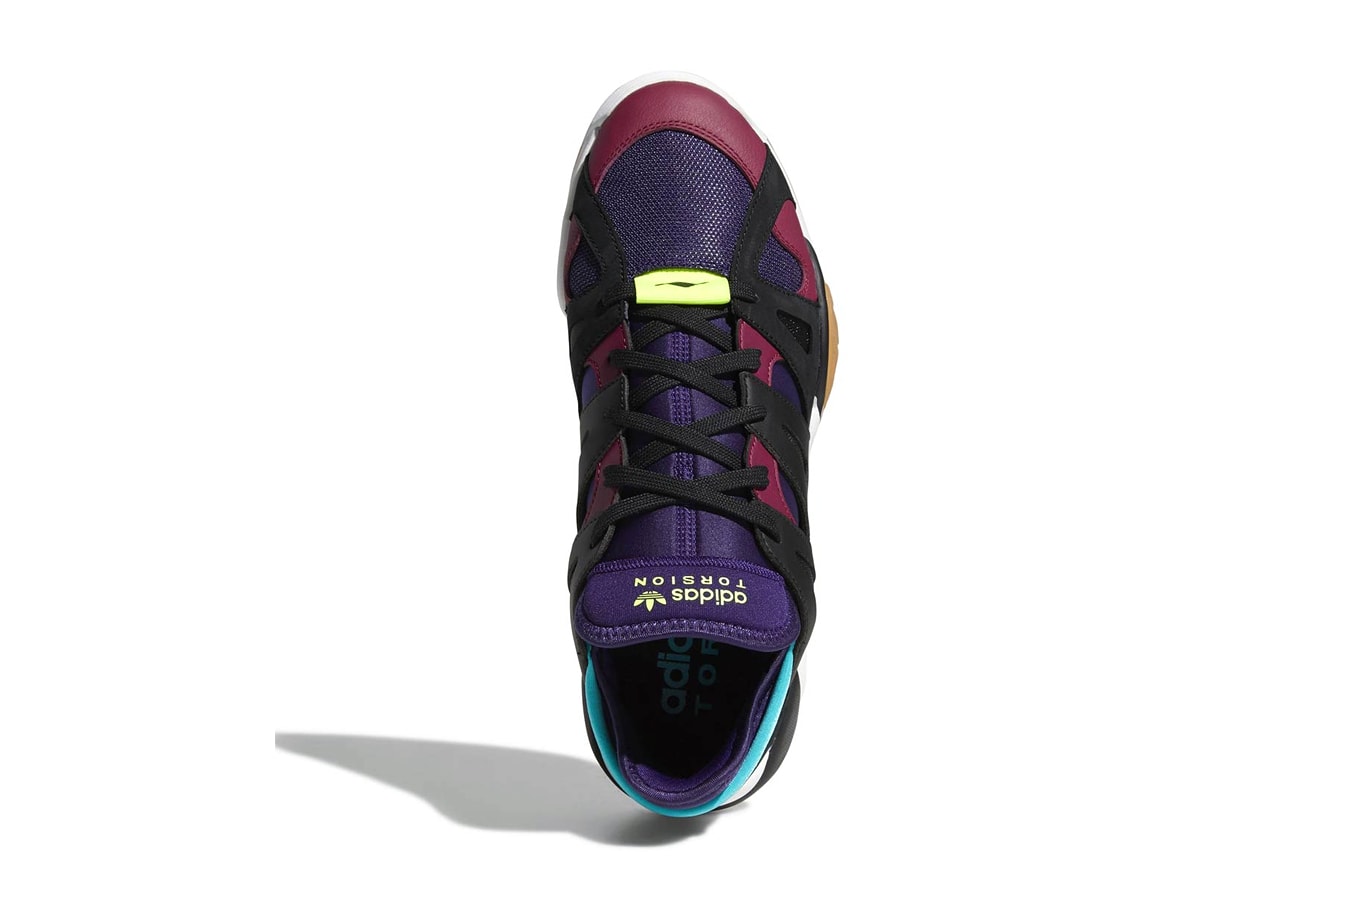 adidas Torsion Dimension Low Dark Plum black blue purple white gum release info sneakers